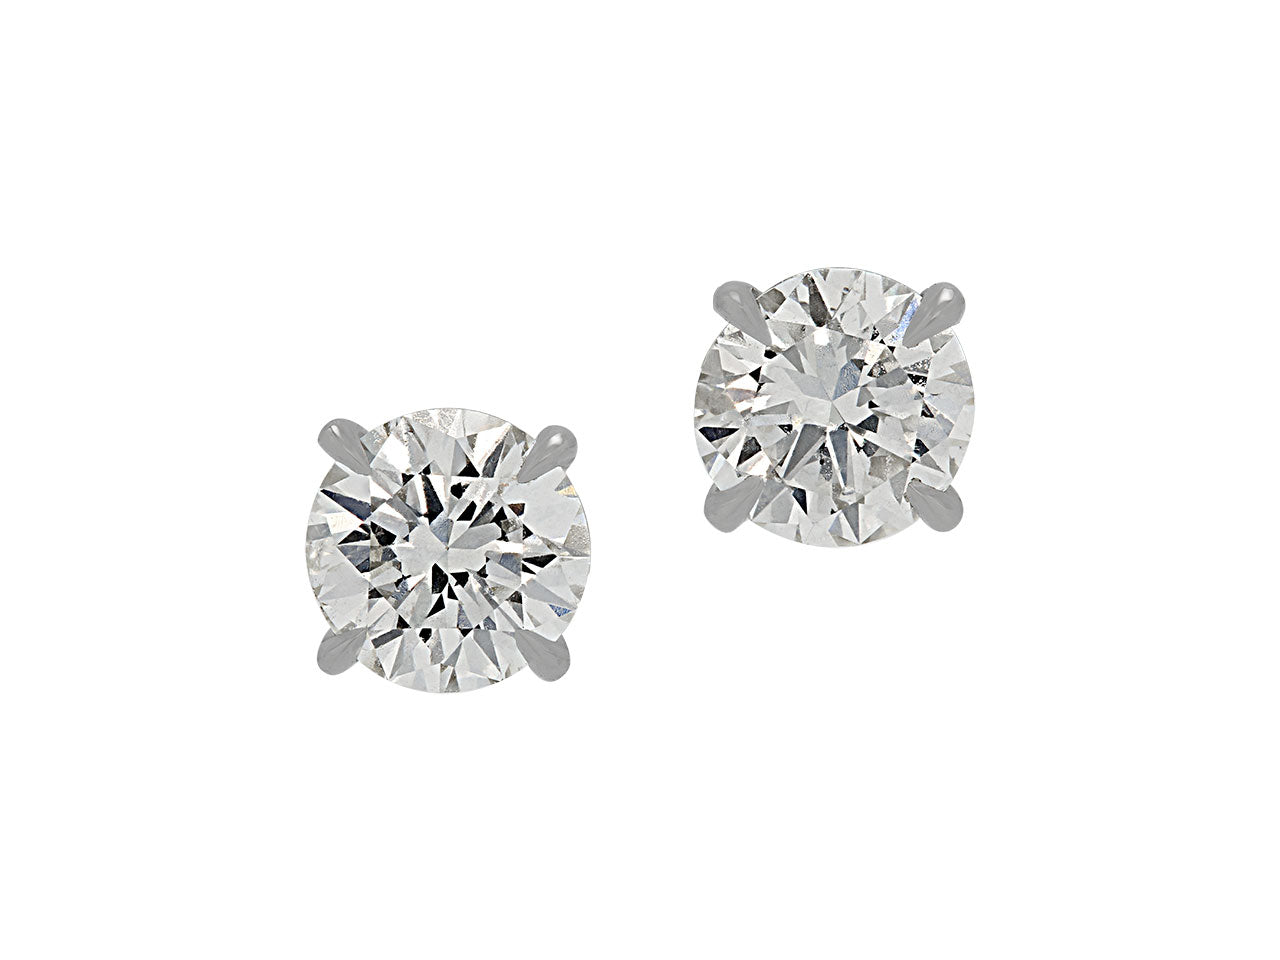 Beladora Diamond Stud Earrings, 2.24 total carats, E/SI-2, in Platinum